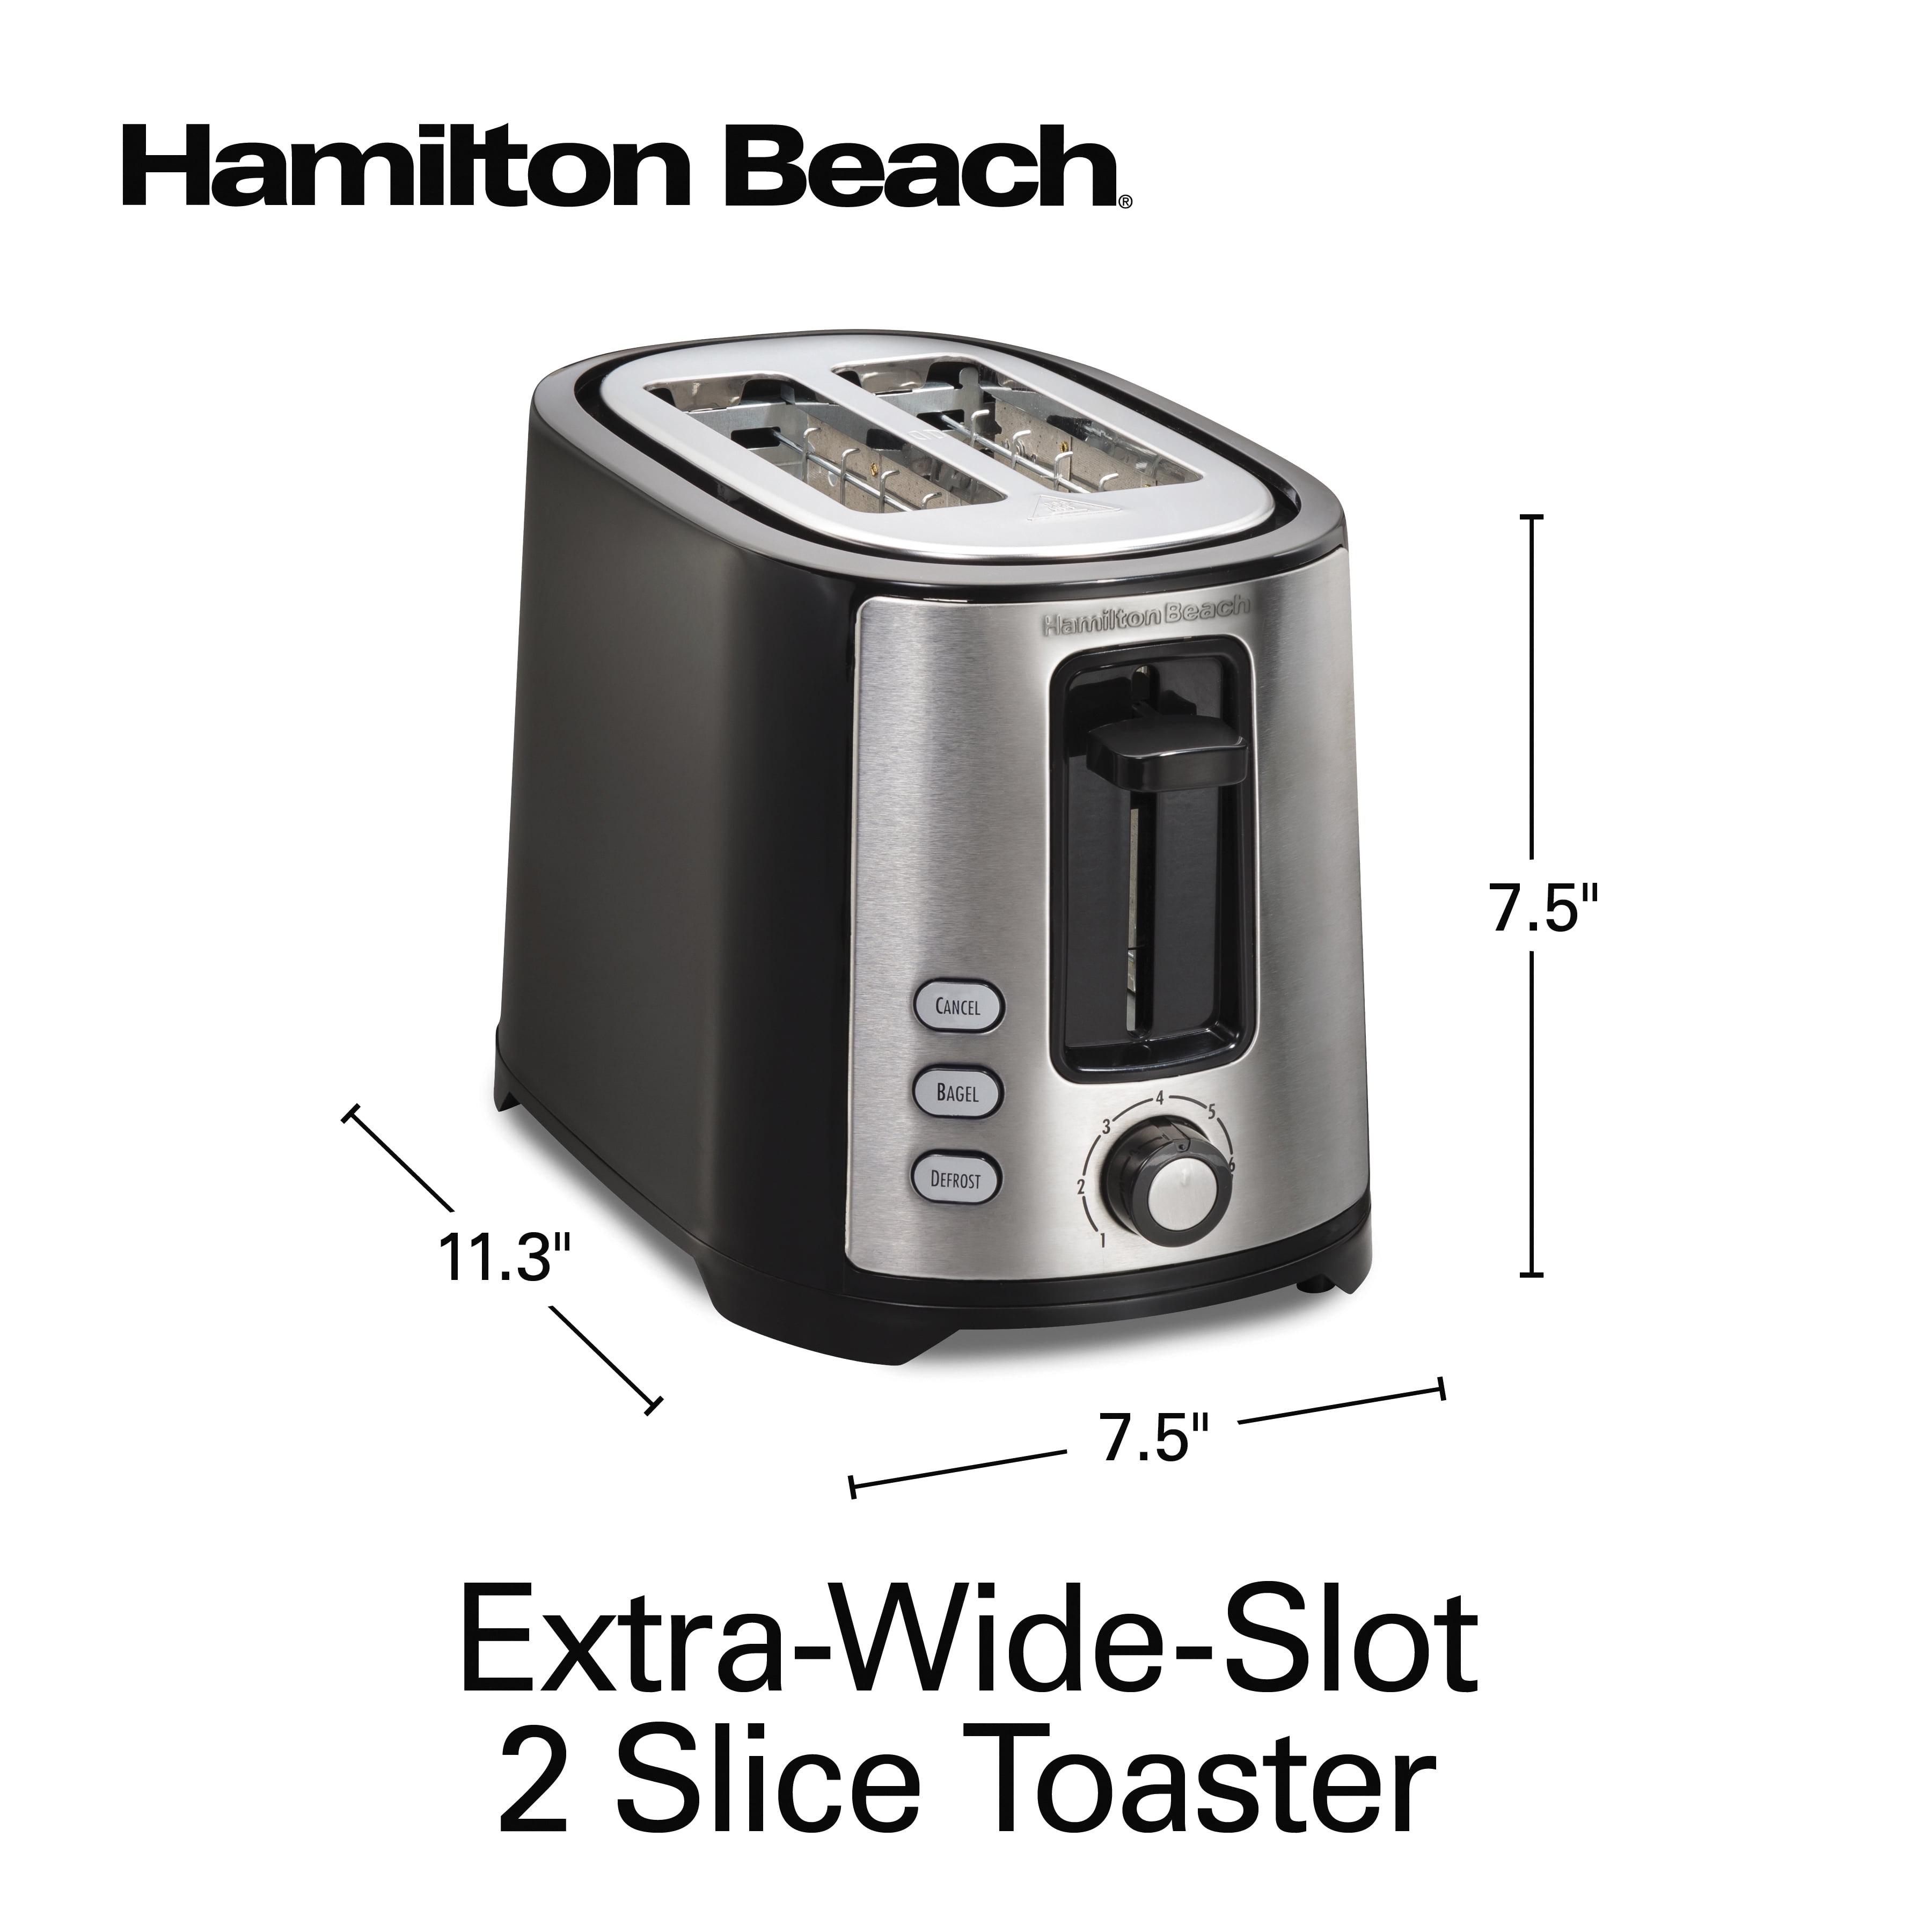 Hamilton Beach 2 Slice Toaster with Extra-Wide Slots - 22714